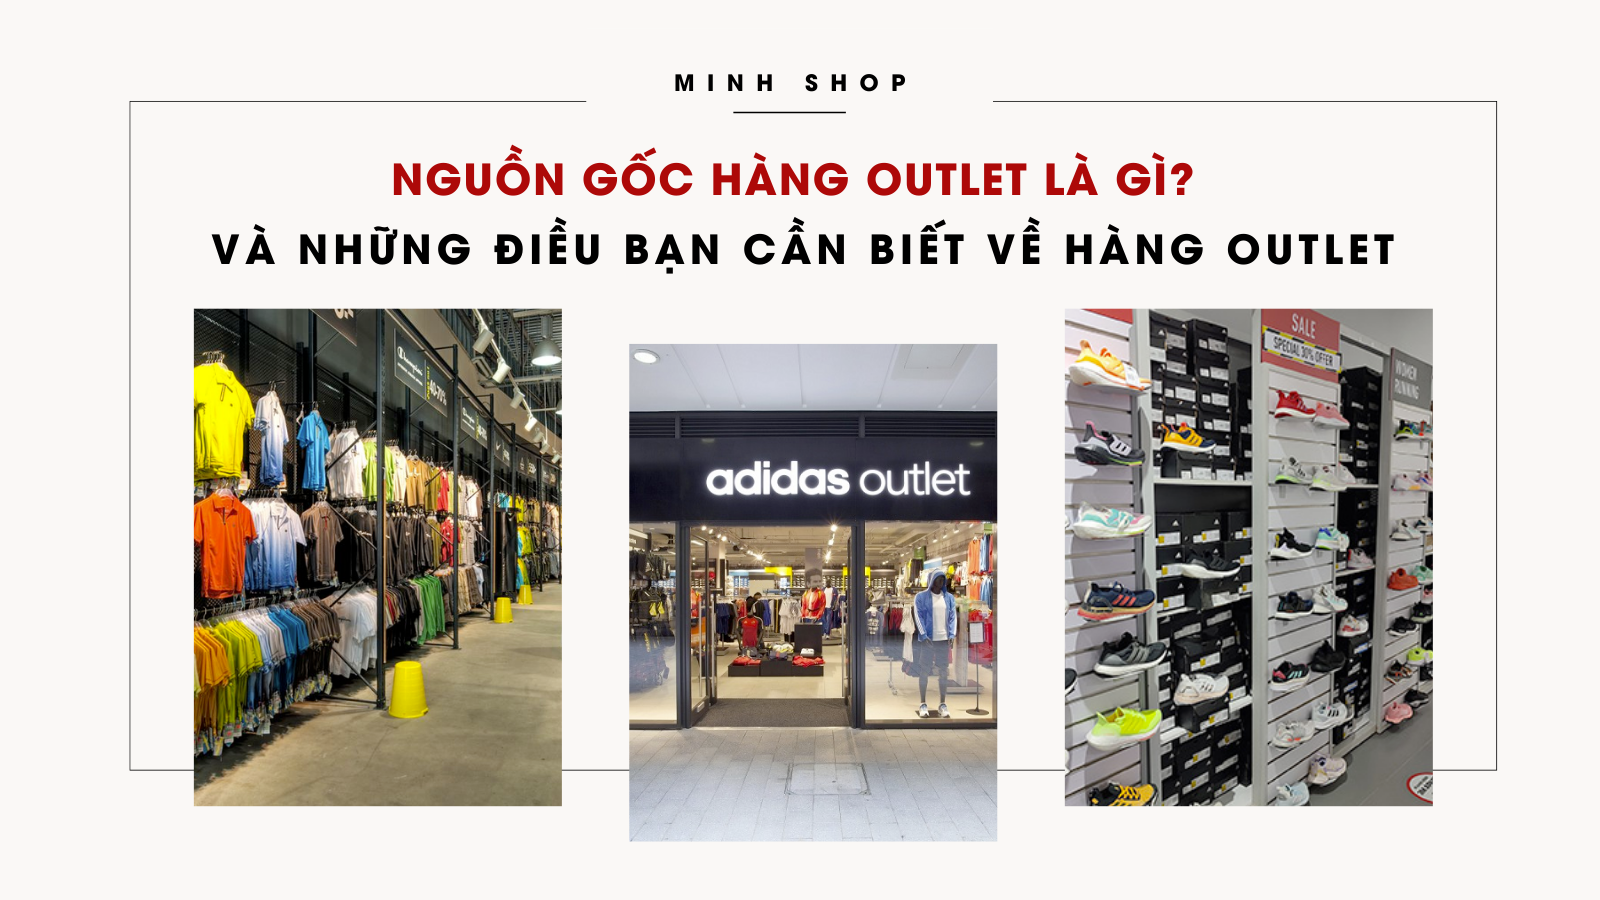 nguon-goc-hang-outlet-la-gi-va-nhung-dieu-ban-can-biet-ve-hang-outlet